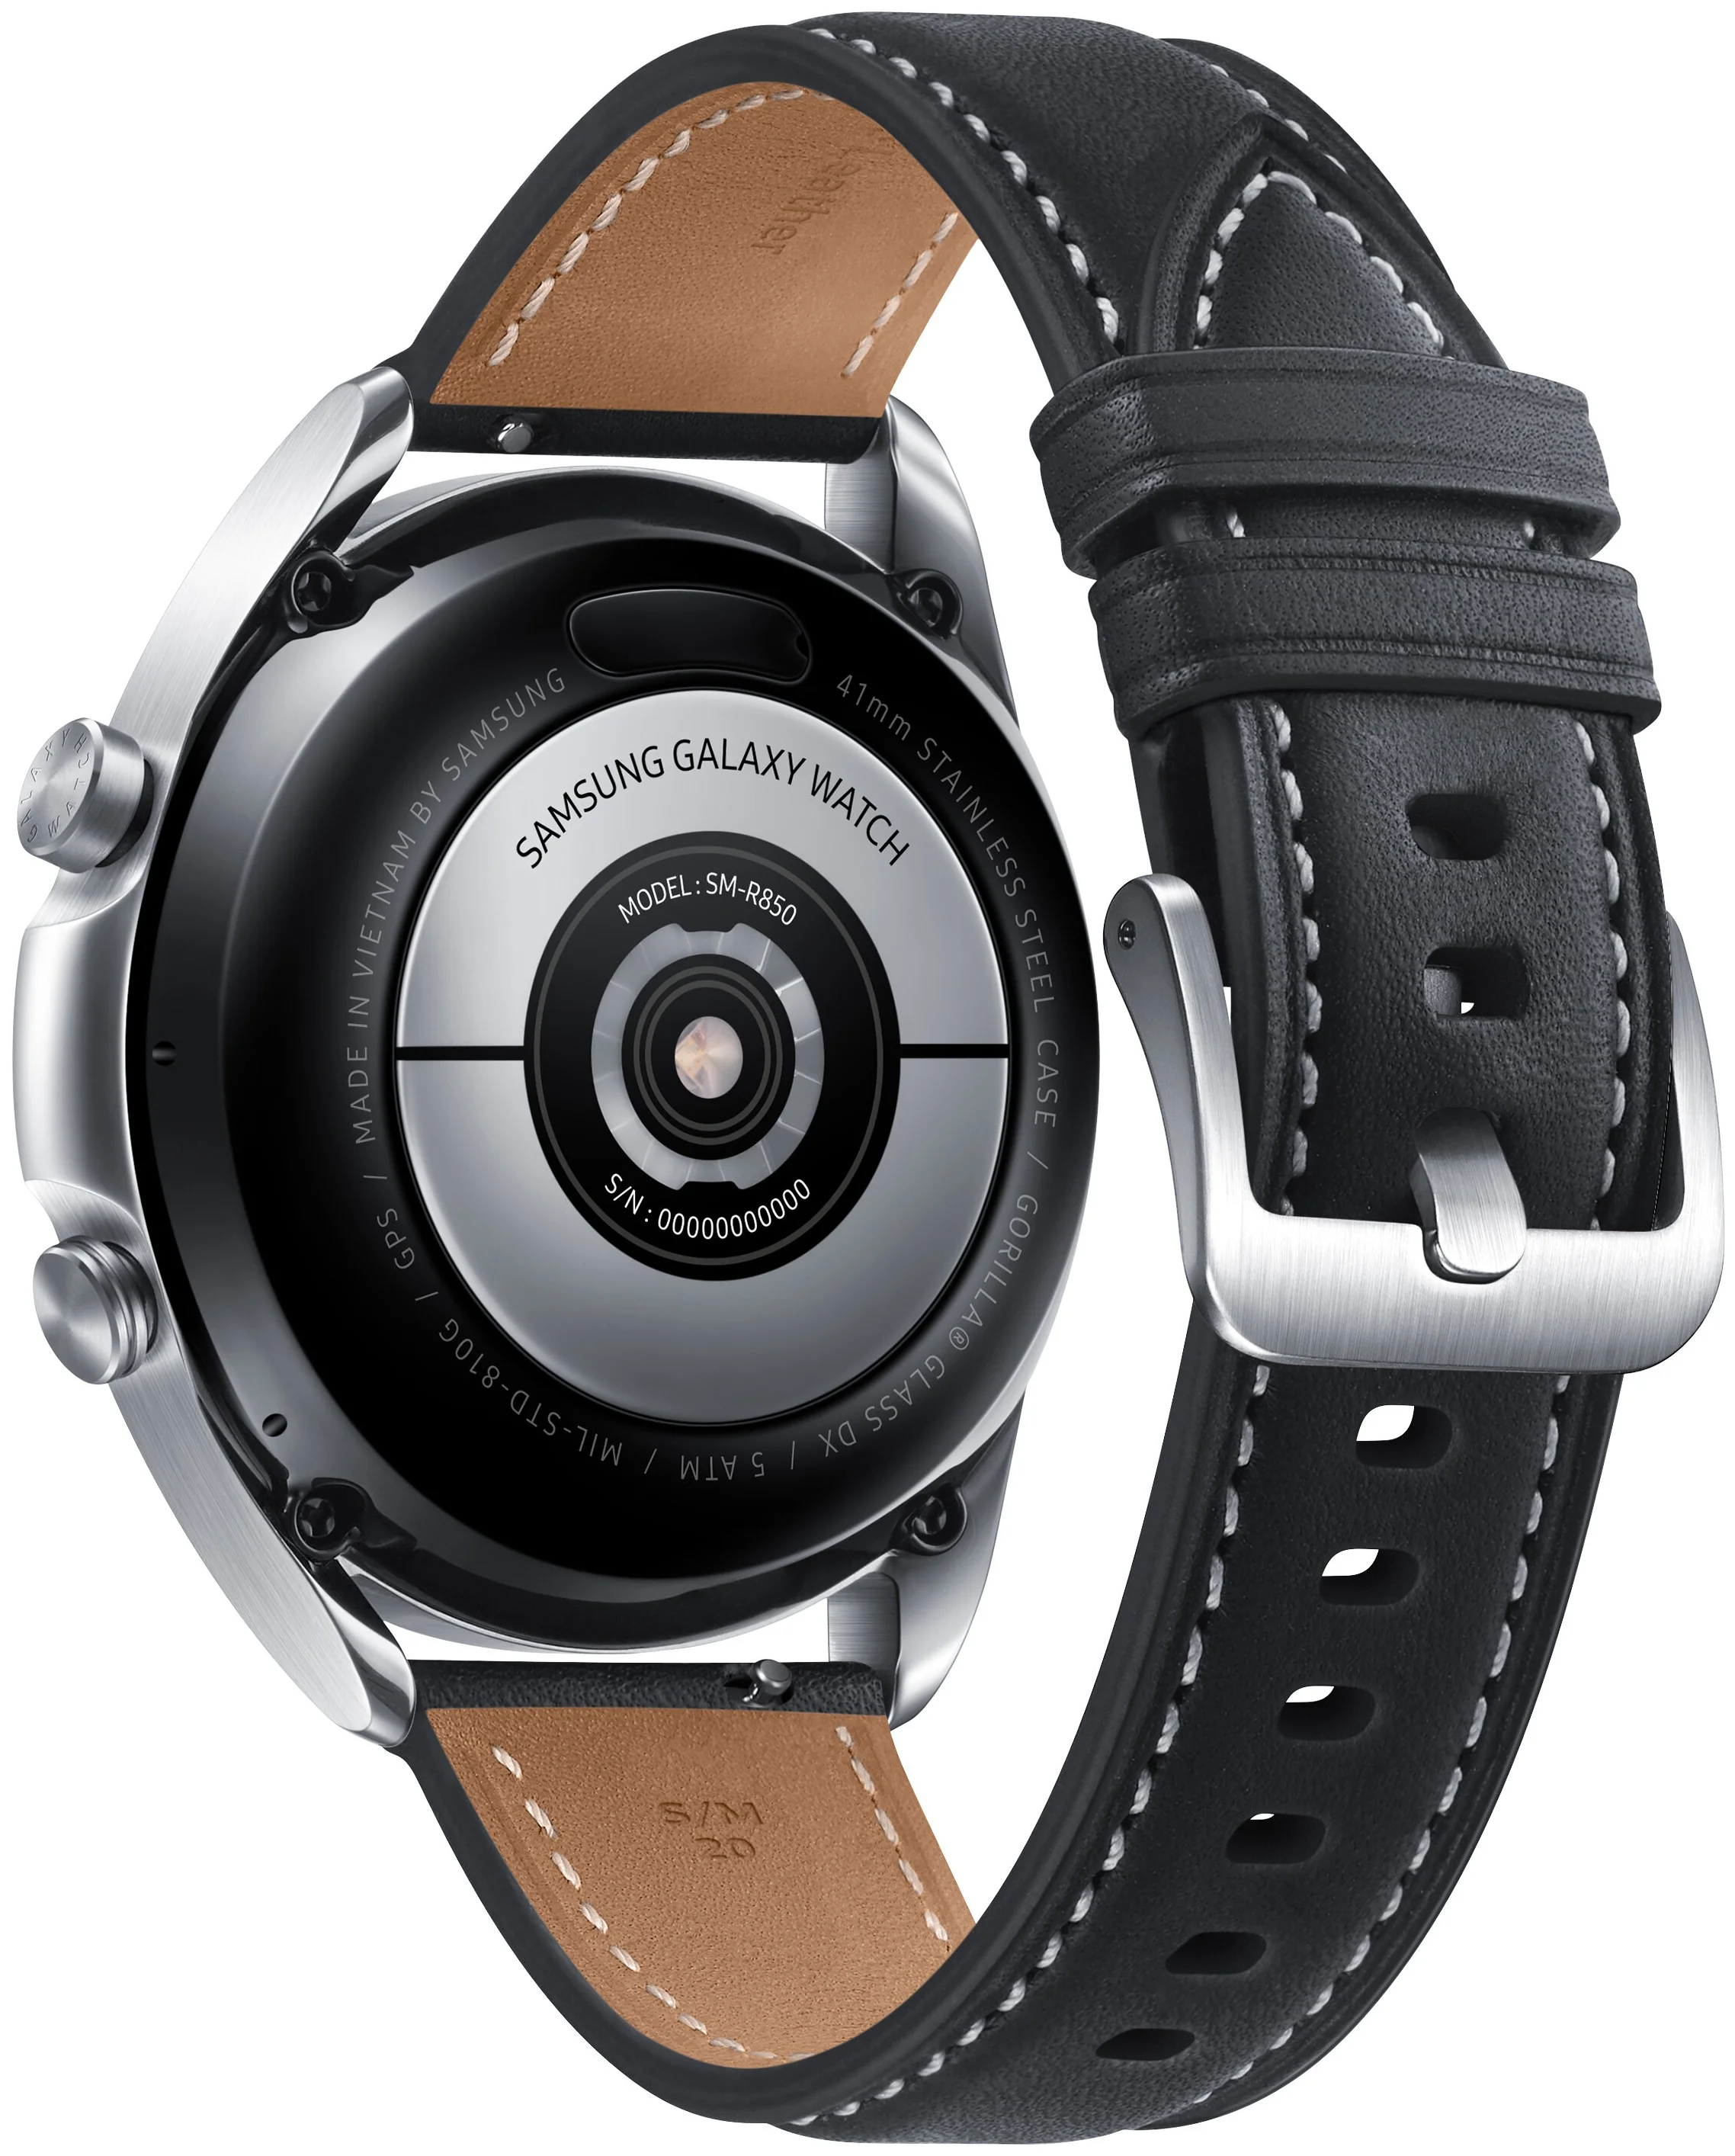 Samsung Galaxy Watch3 41мм - мониторинг: калорий, физической активности, сна, уровня кислорода